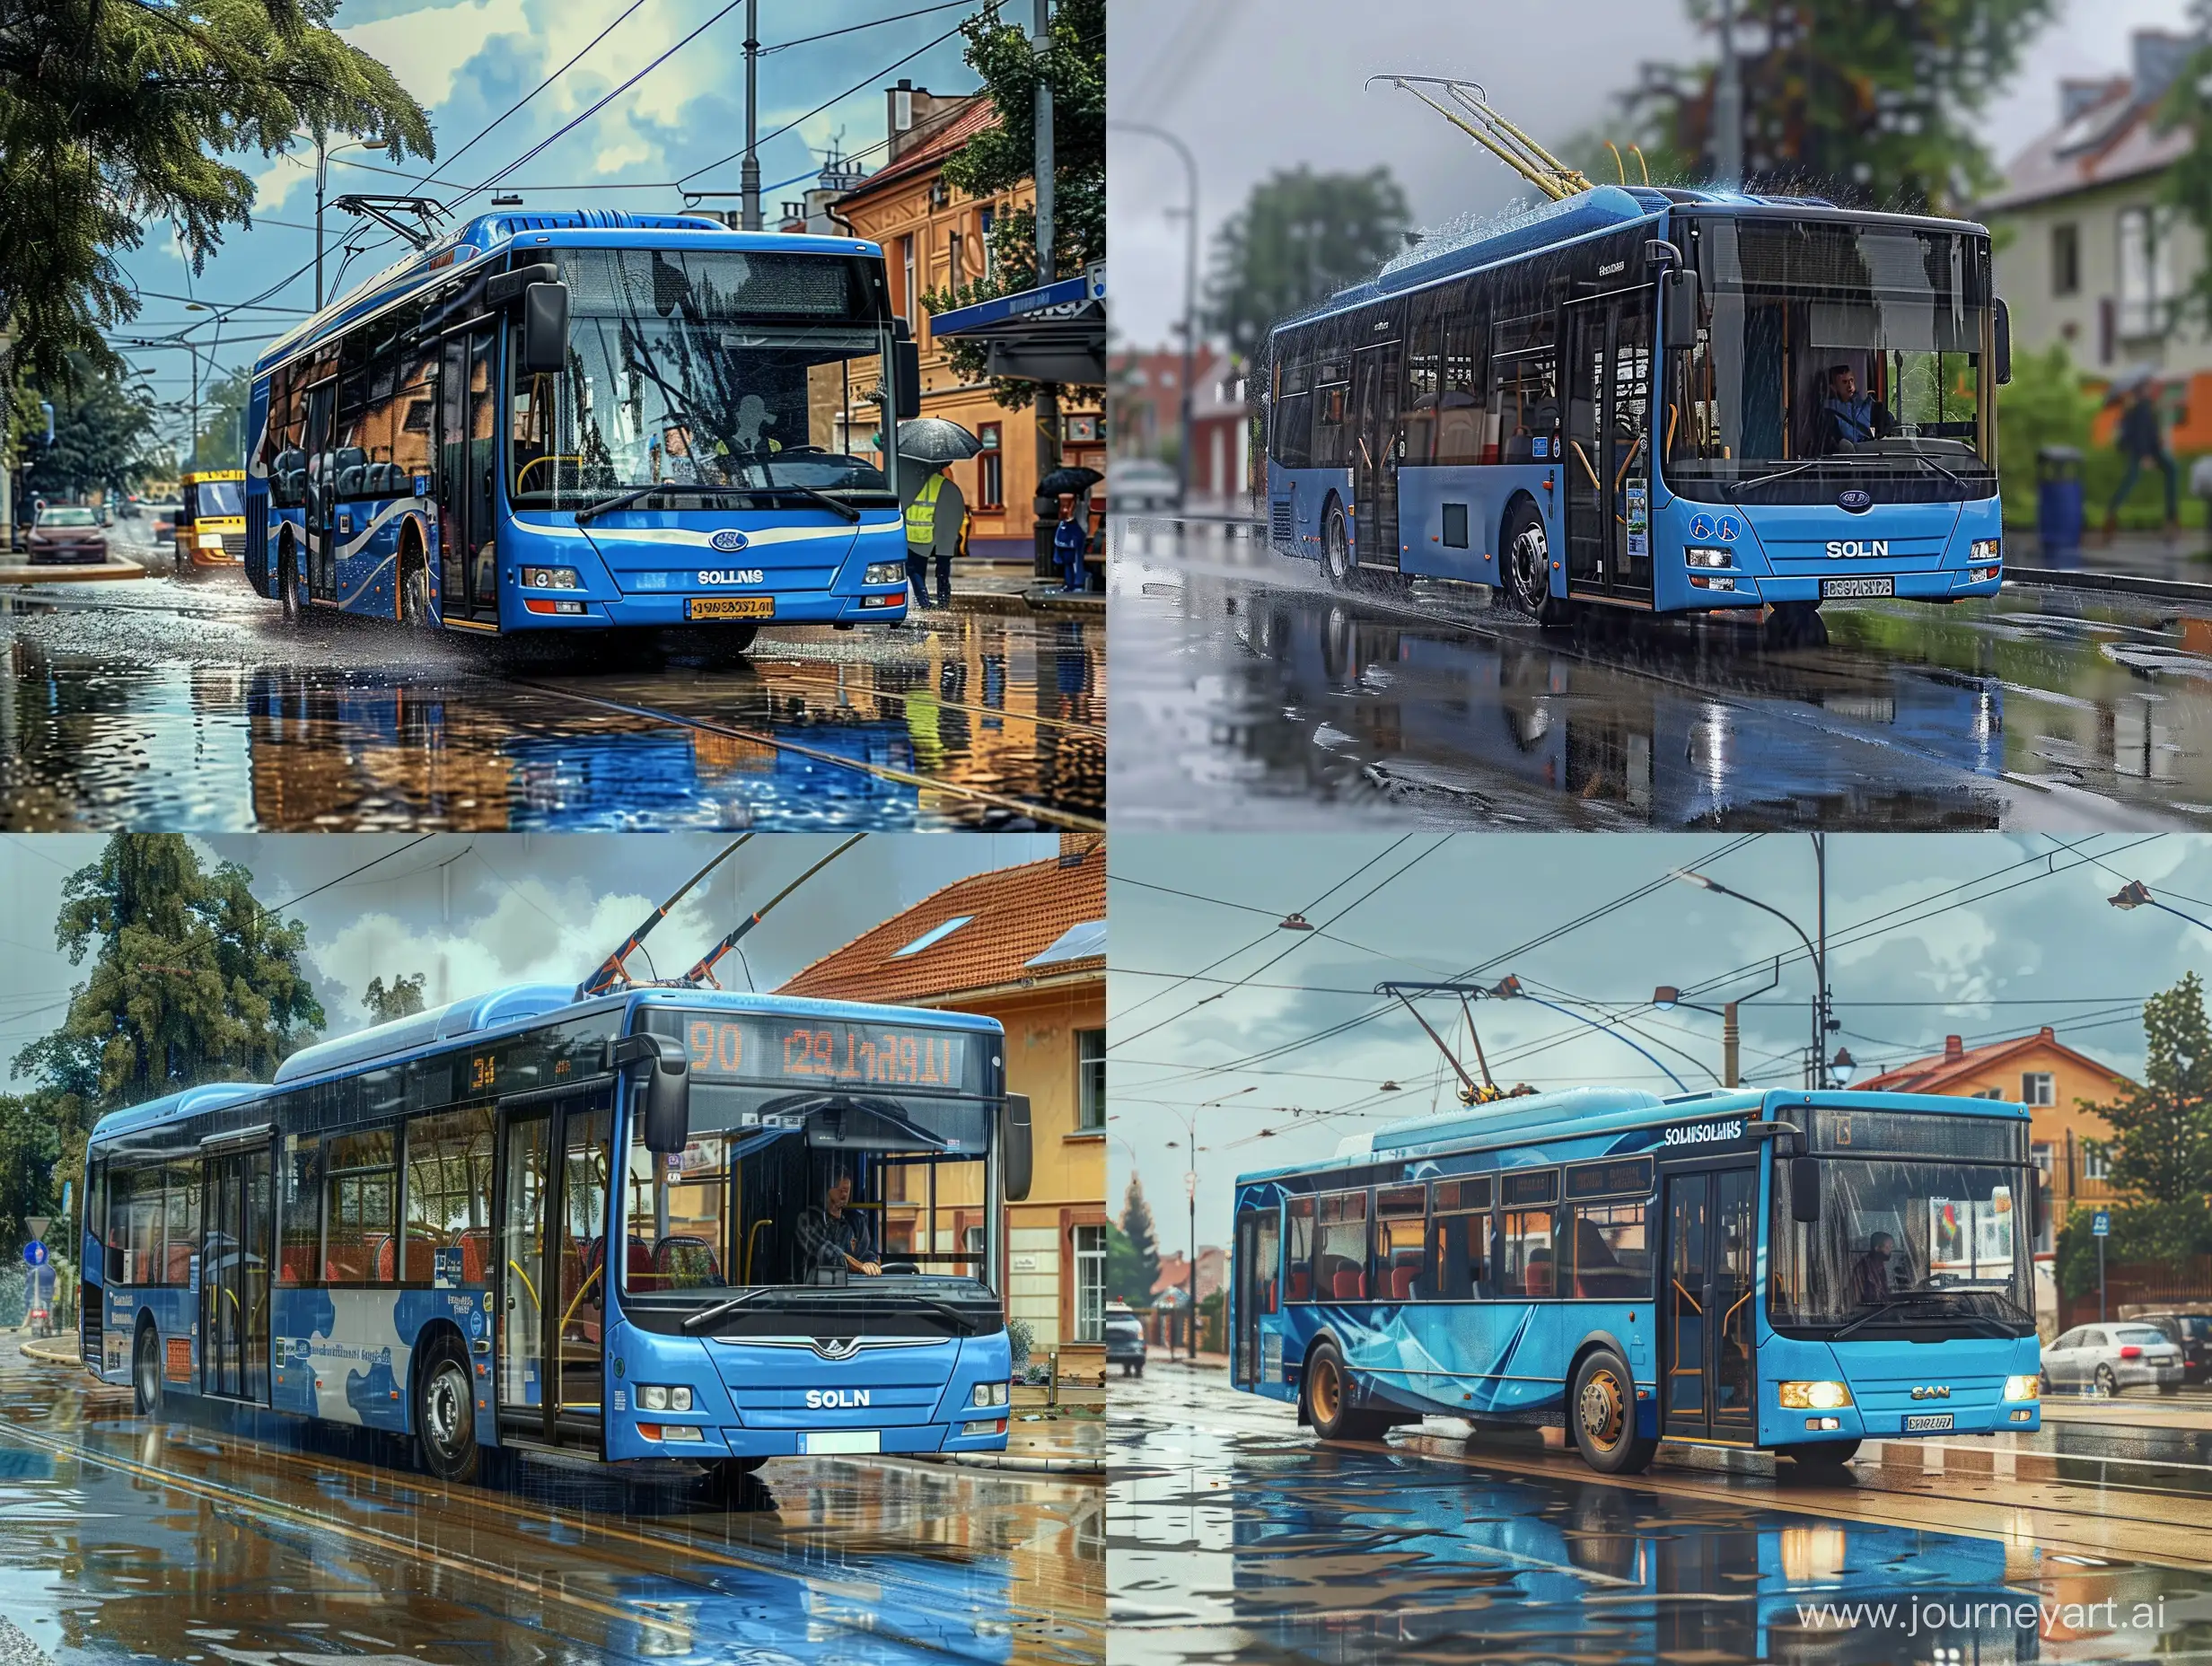 A typical blue Solaris bus on the street of Polish city Wejherowo. Photorealistic. Rainy summer day.